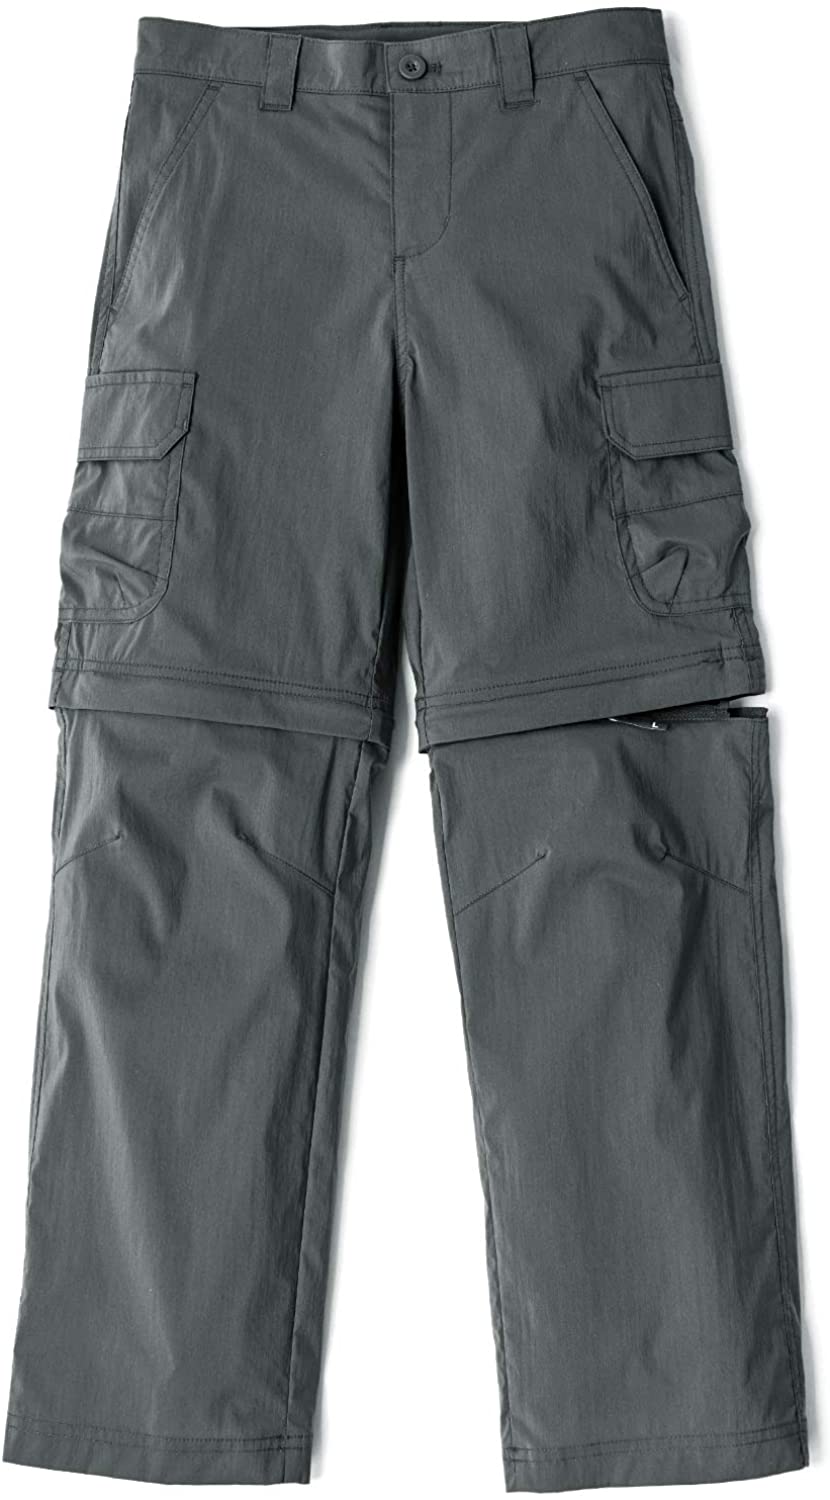 Outdoor Camping Pants CQR Kids Youth Hiking Cargo Pants UPF 50 Quick Dry Convertible Zip Off/Regular Pants 